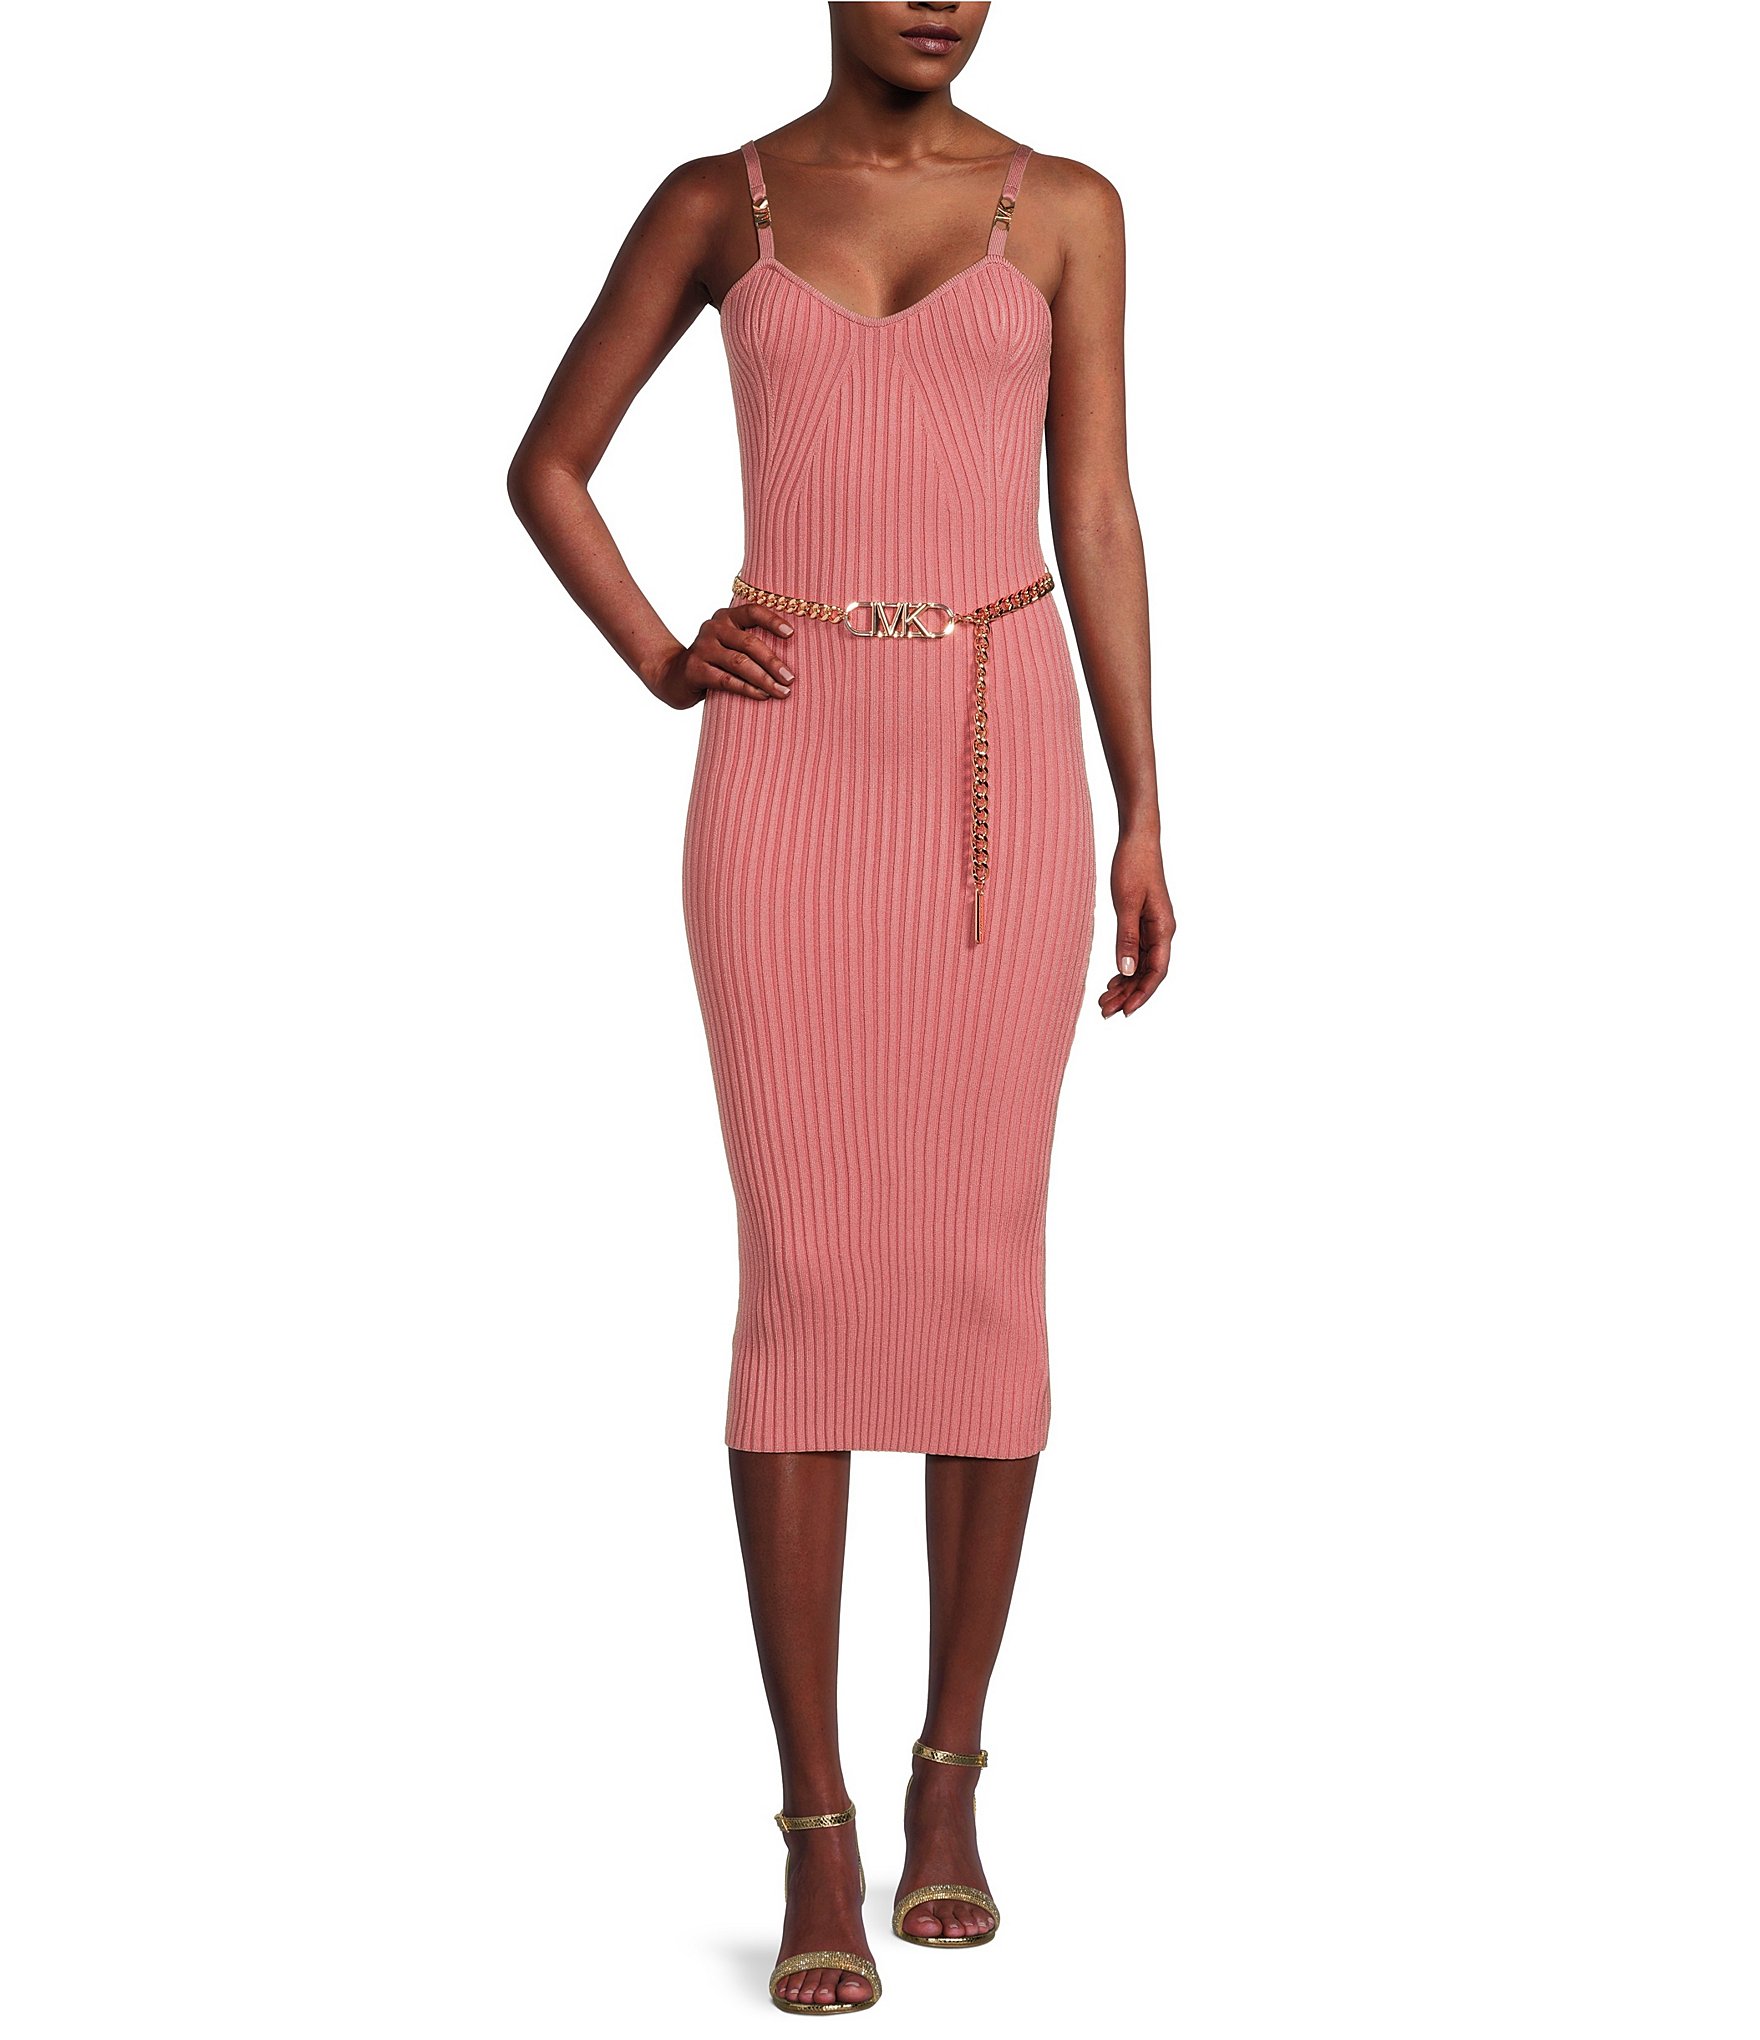 Michael Kors Pink Lace Dress  Todays Fashion Item  Lace pink dress  Fashion Yellow lace dresses